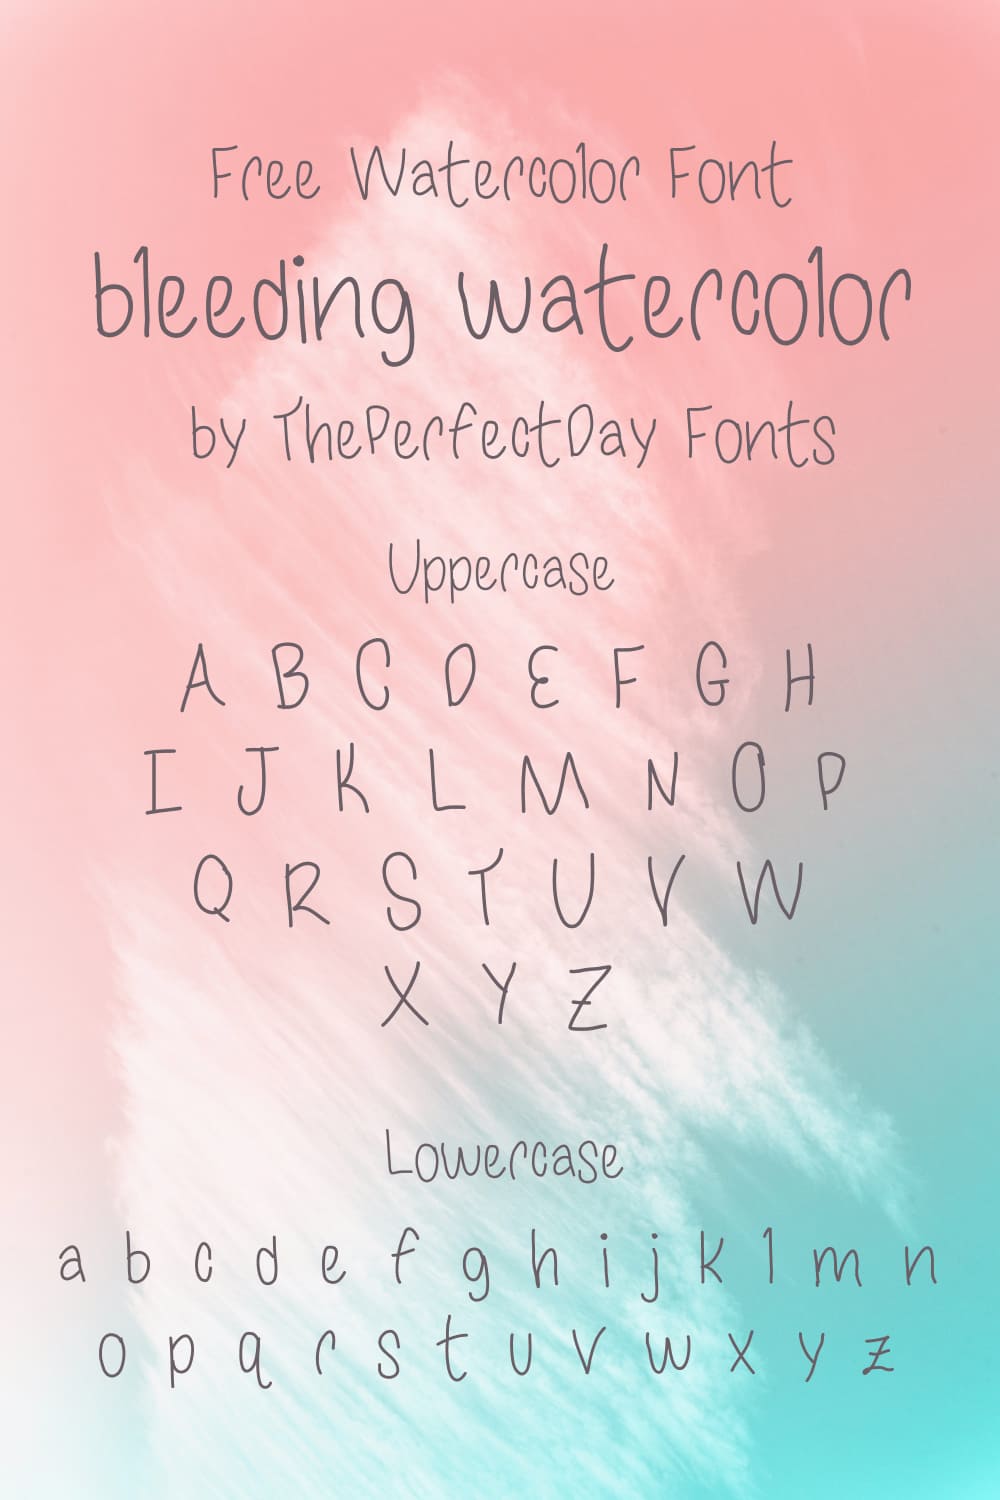 Alphabet example image Free Watercolor Font by MasterBundles.